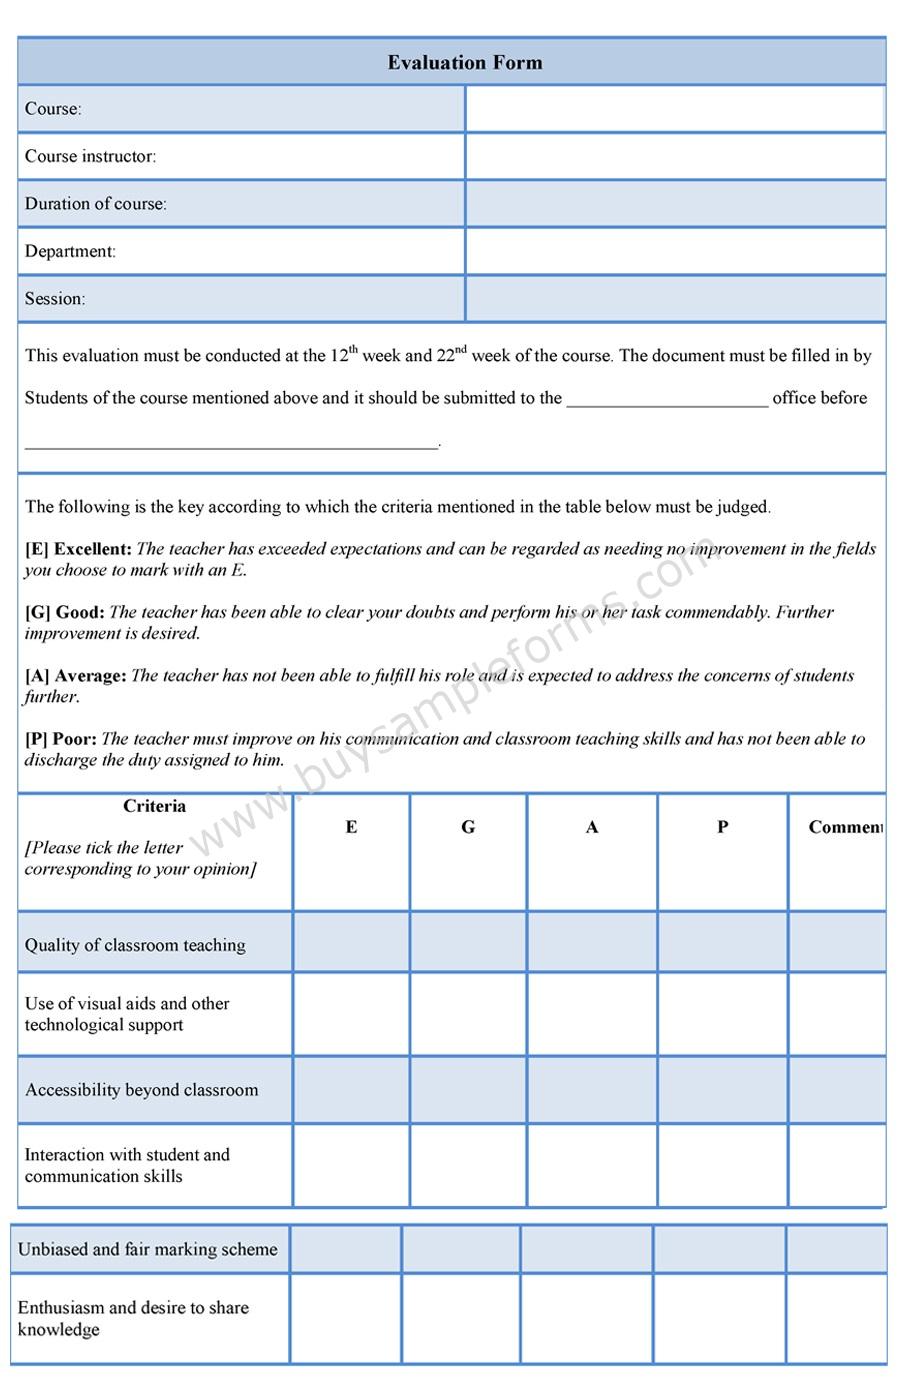 sample-evaluation-form-evaluation-form-template